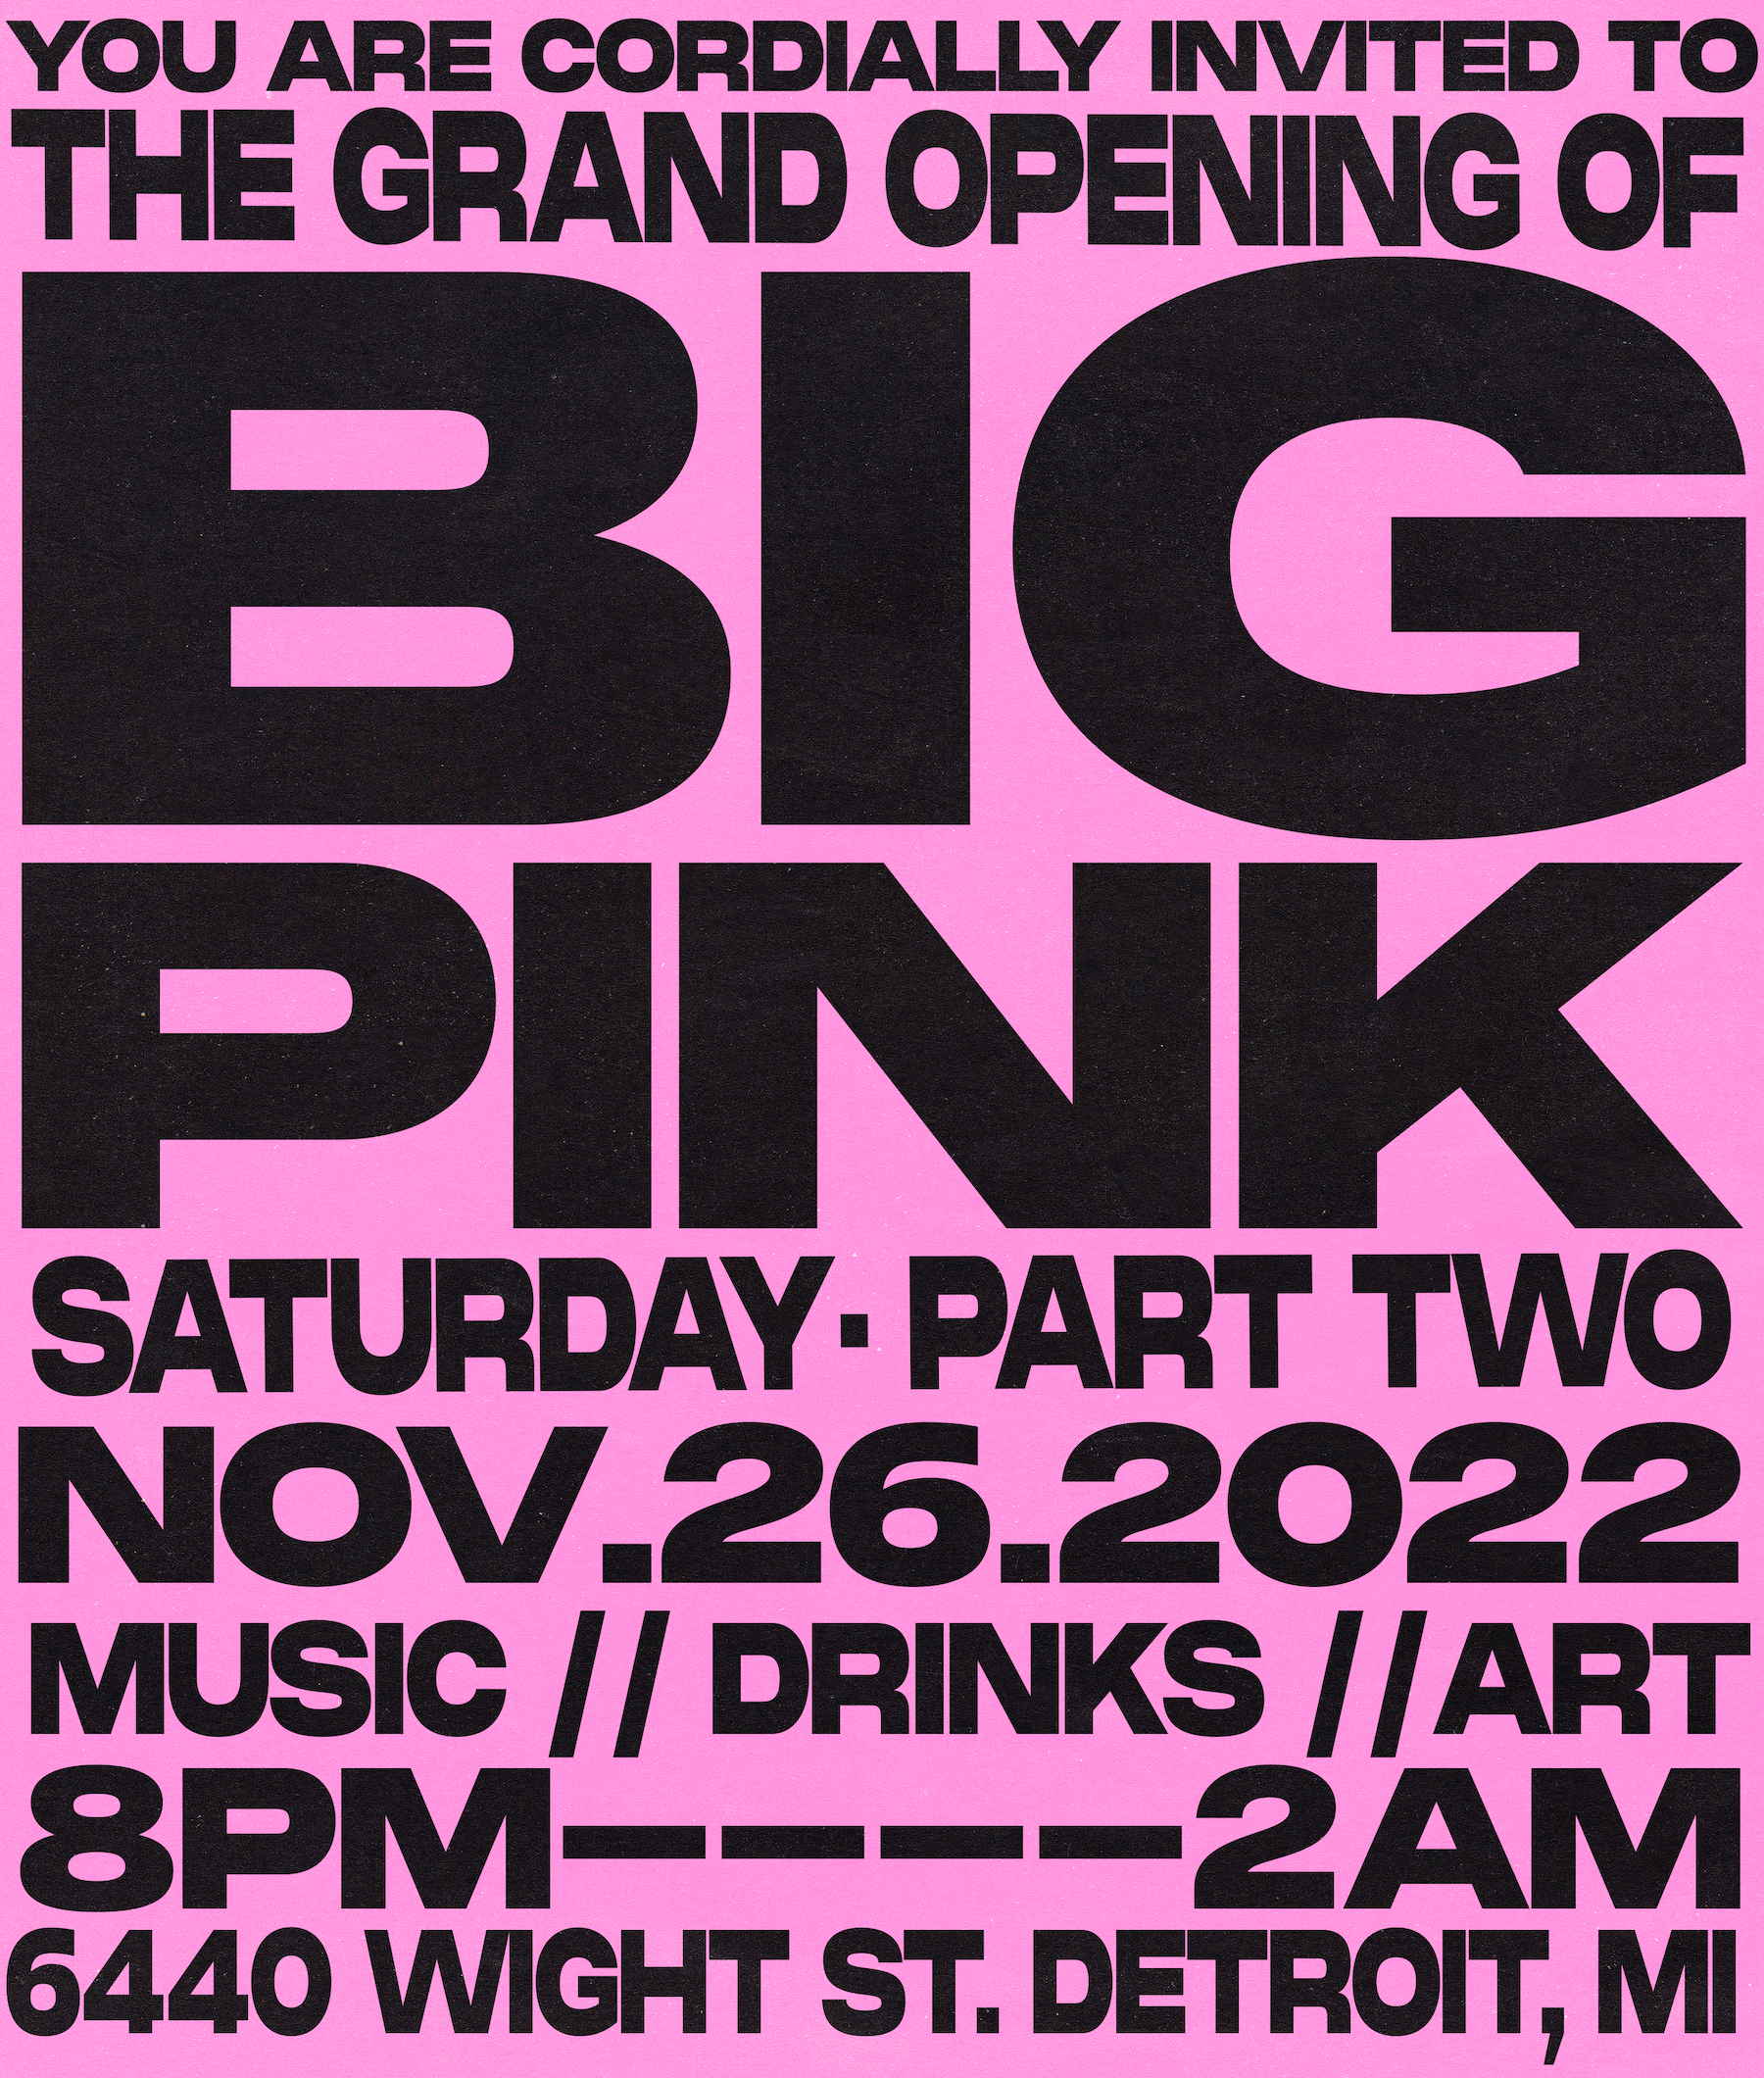 Big Pink Detroit